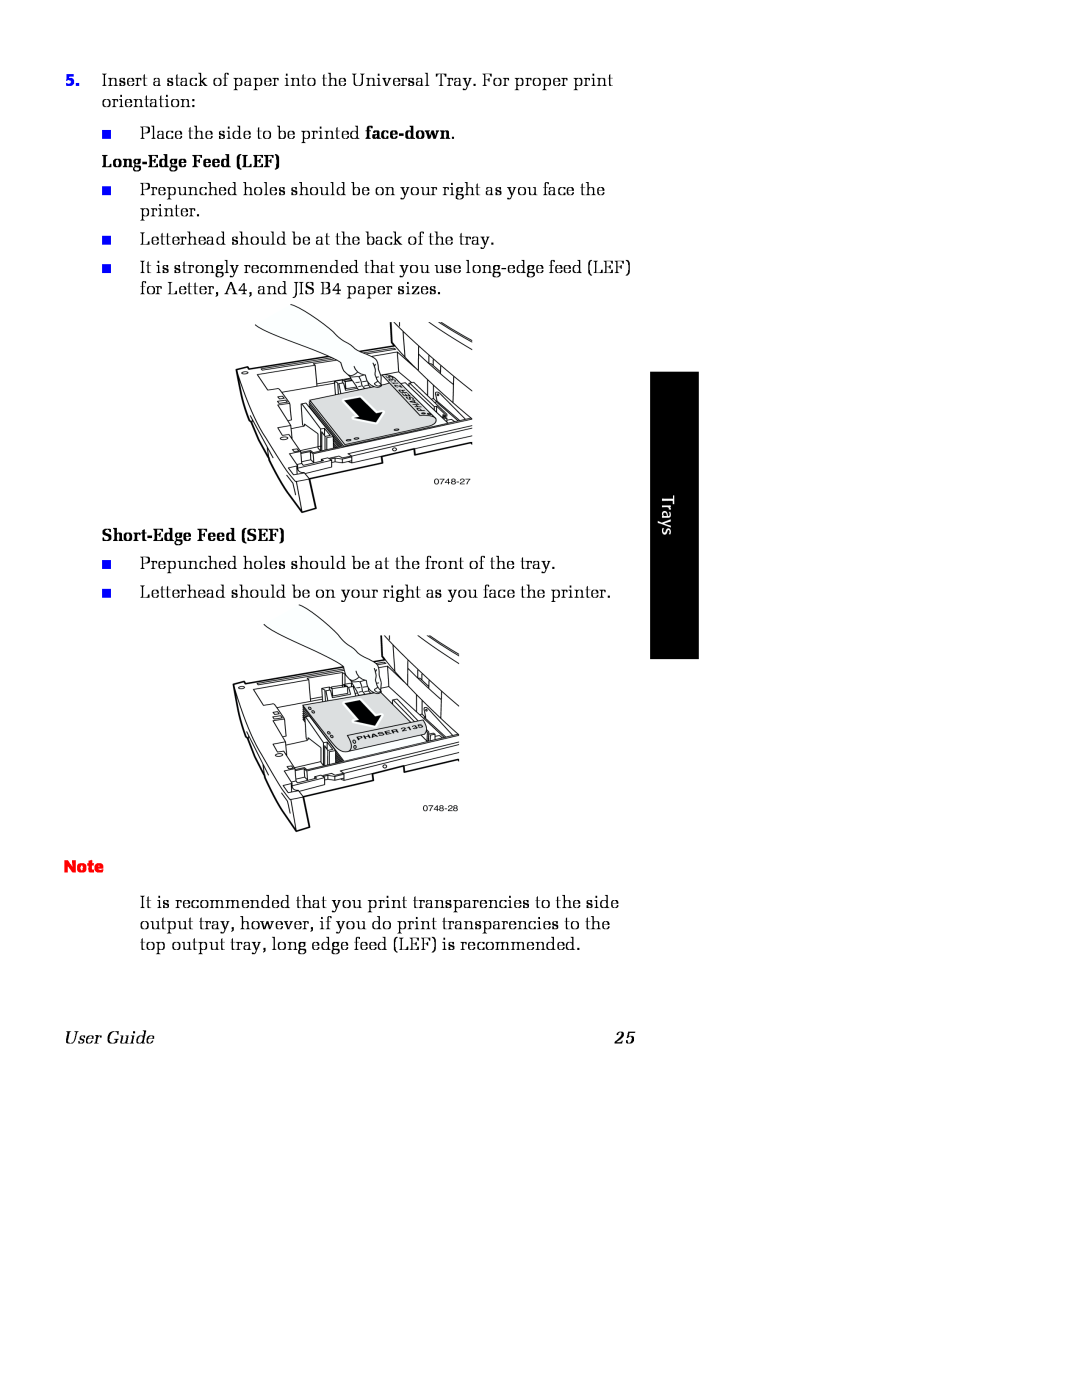 Xerox Phaser 2135 manual Long-Edge Feed LEF, Short-Edge Feed SEF, Trays, User Guide, 5 3 1 2 R E S A H P 